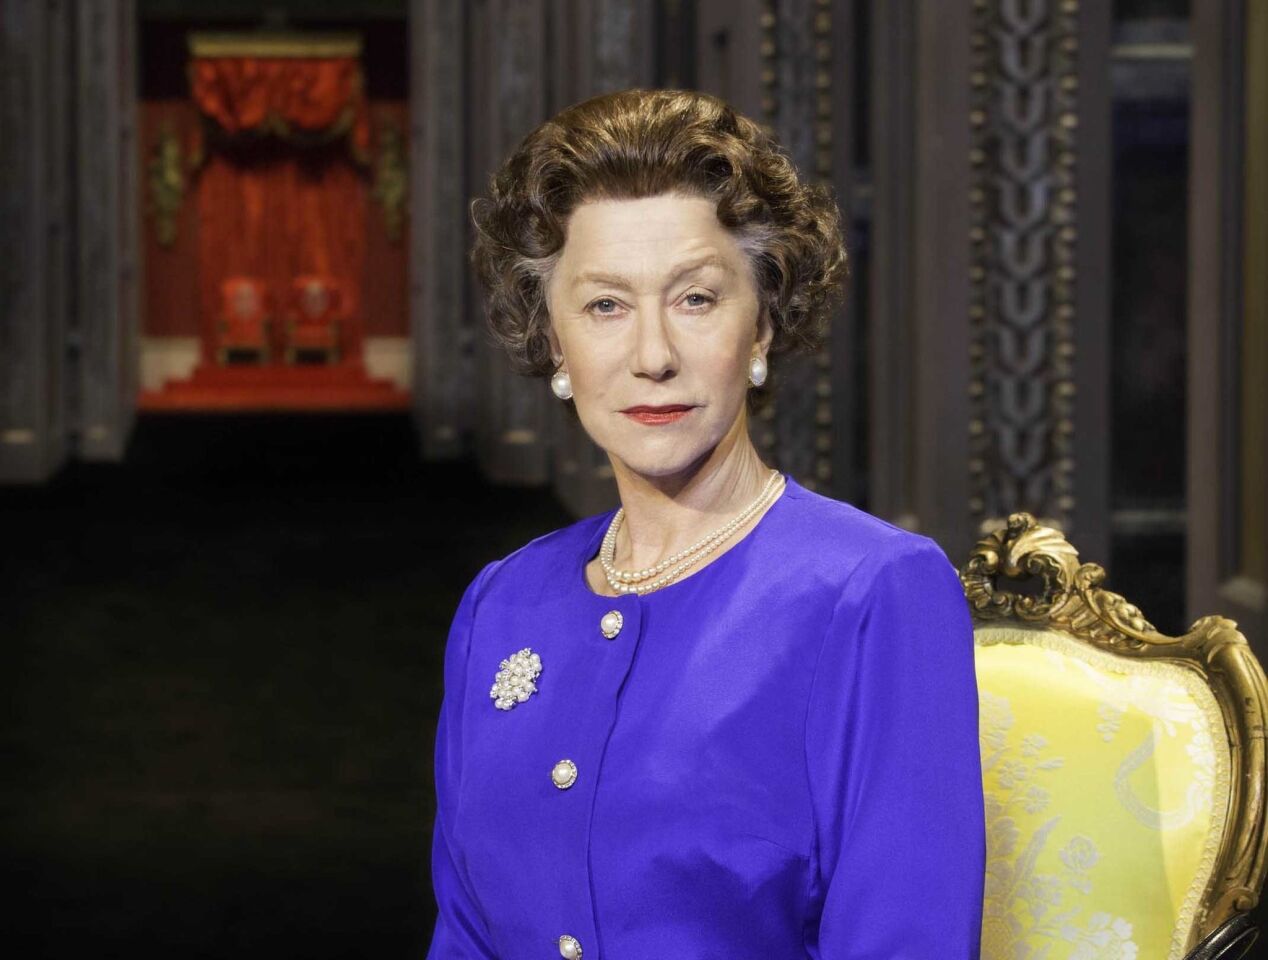 Oscar winner Helen Mirren once again portrays Queen Elizabeth II in Peter Morgan's play "The Audience," directed by two-time Tony Award winner Stephen Daldry.